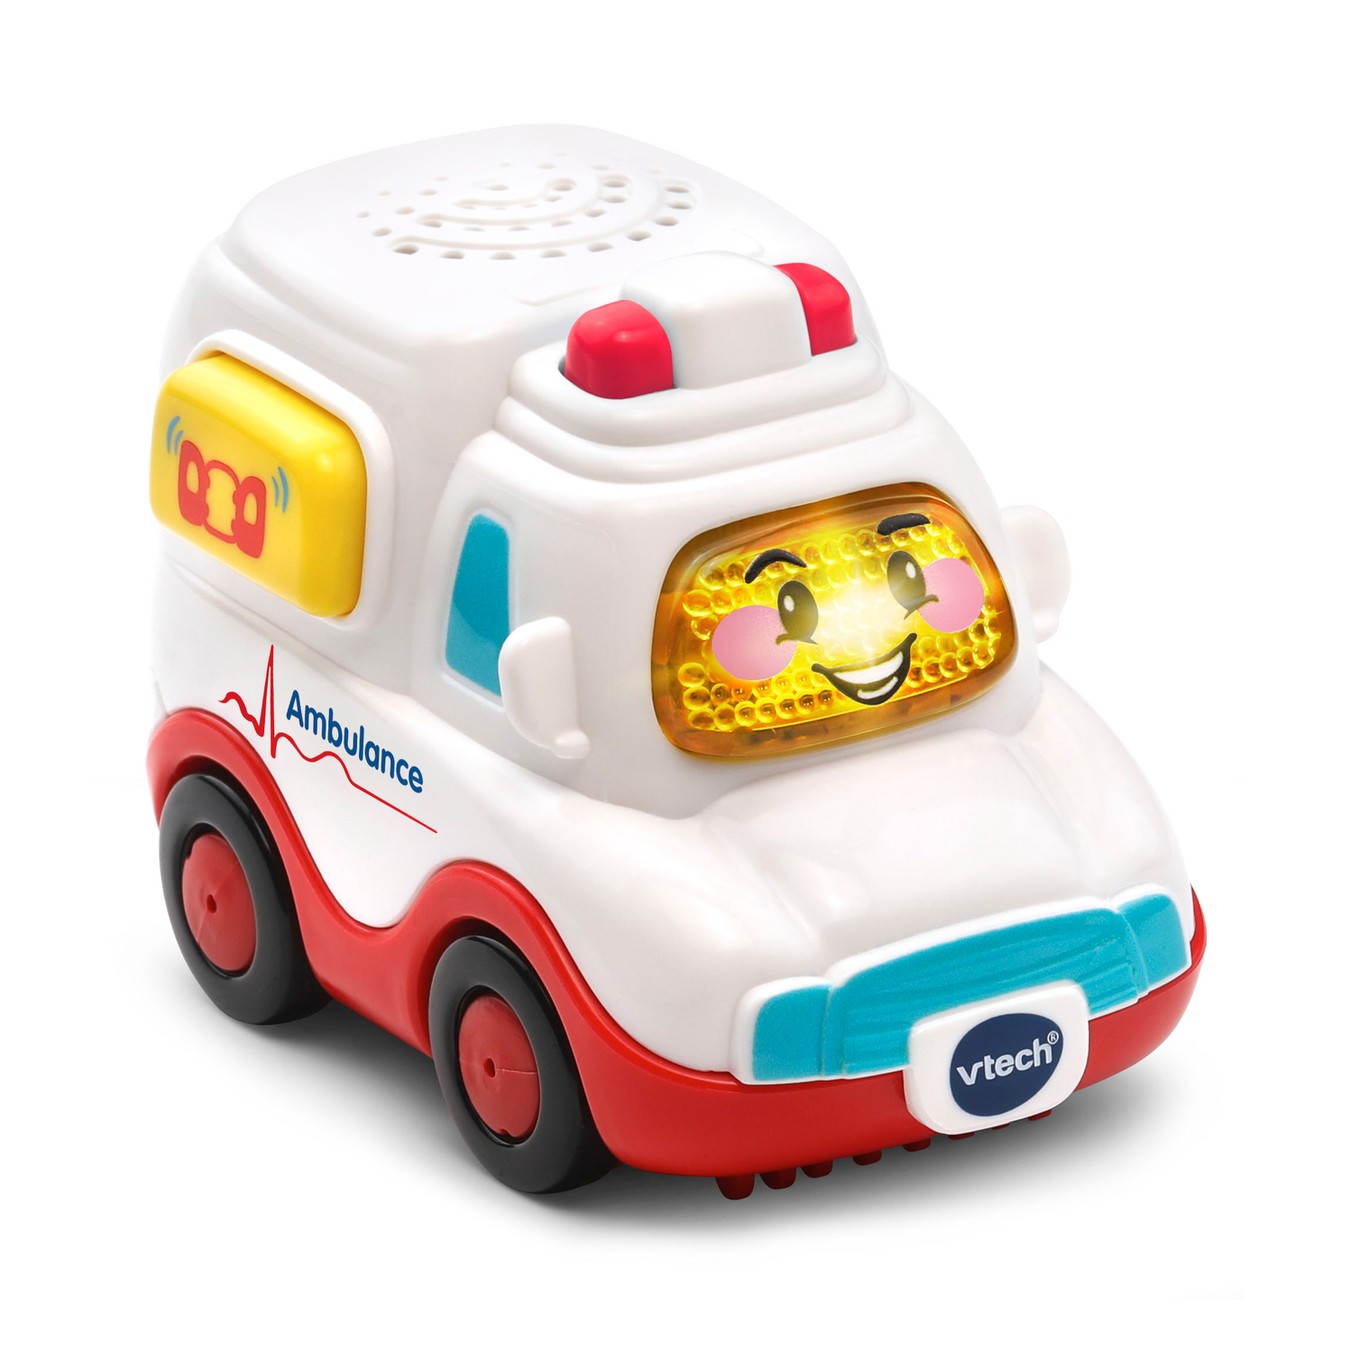 Toddler Toys │ Go! Go! Smart Wheels® │ Ambulance │ VTech®